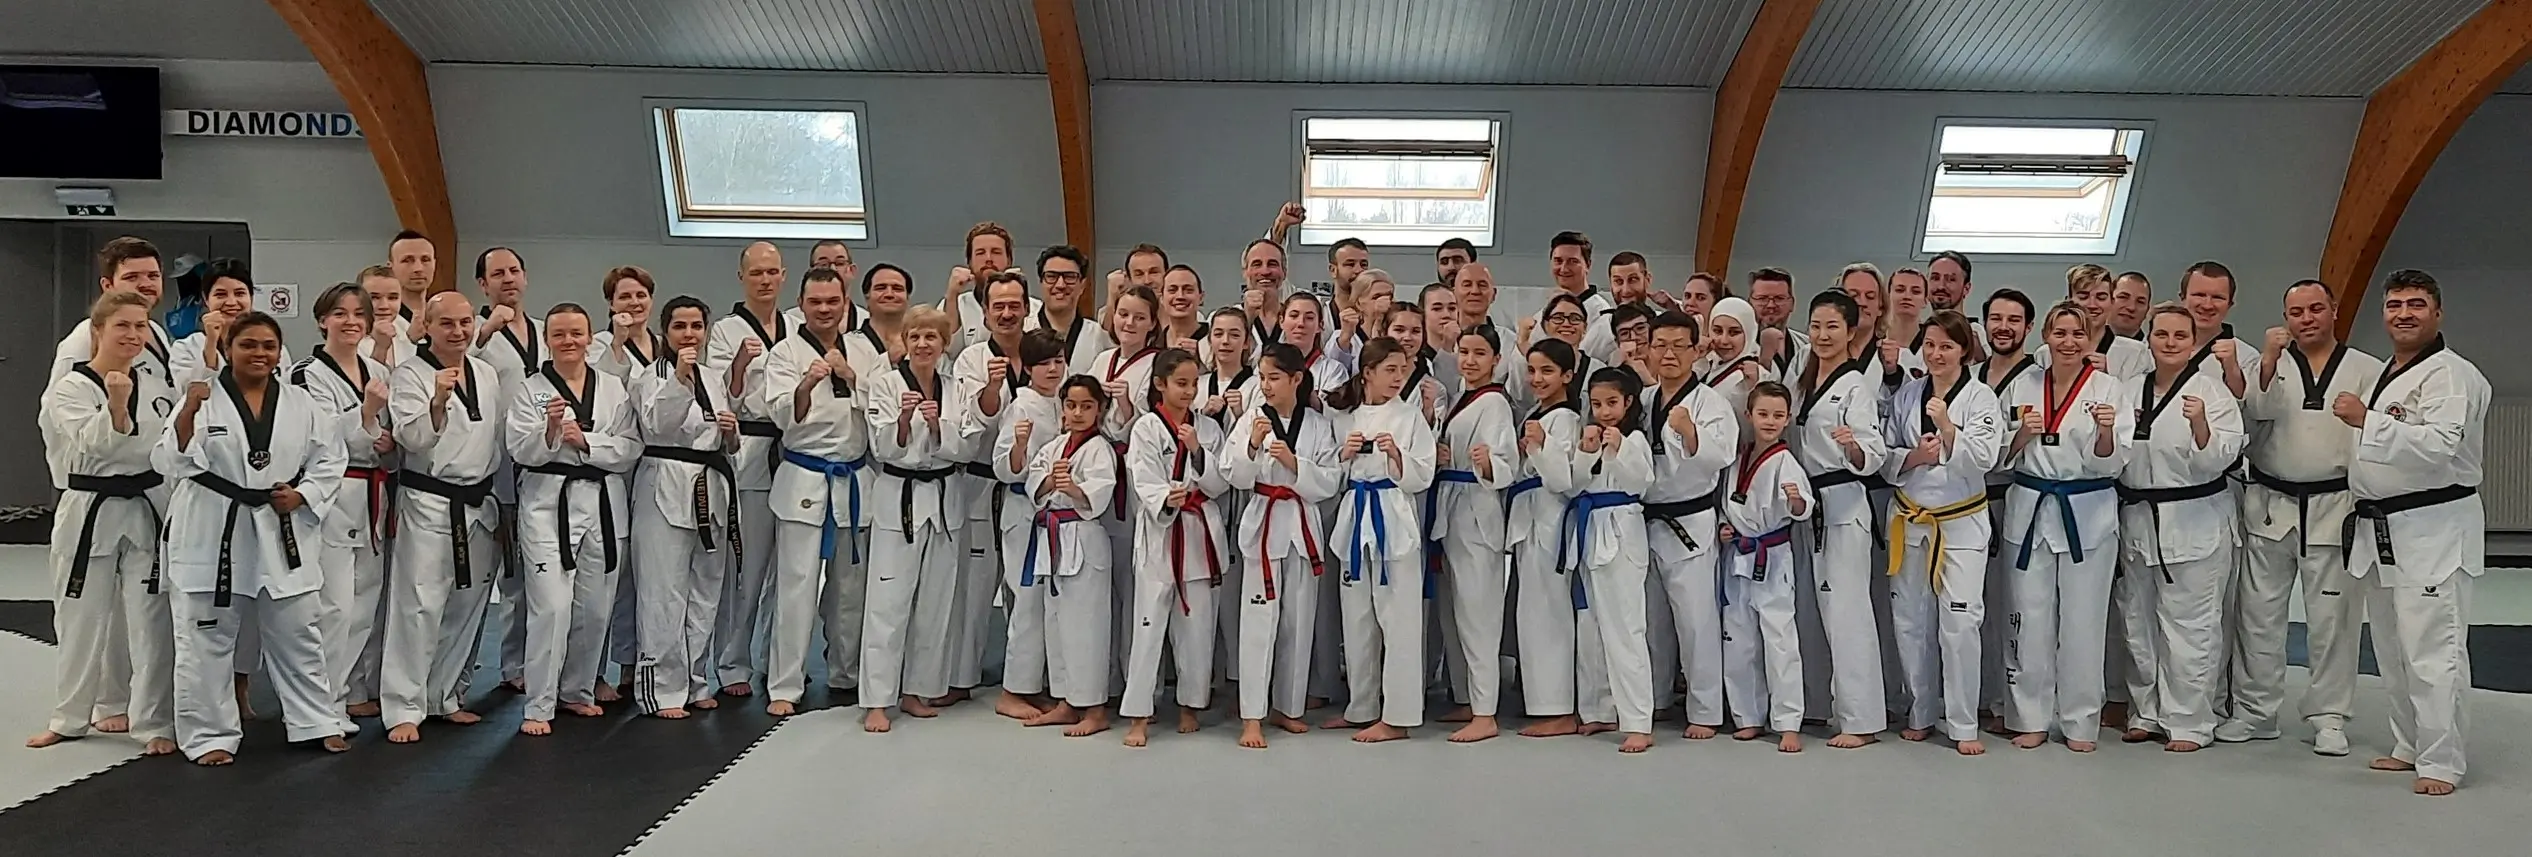 International Taekwondo seminar in Belgium 1